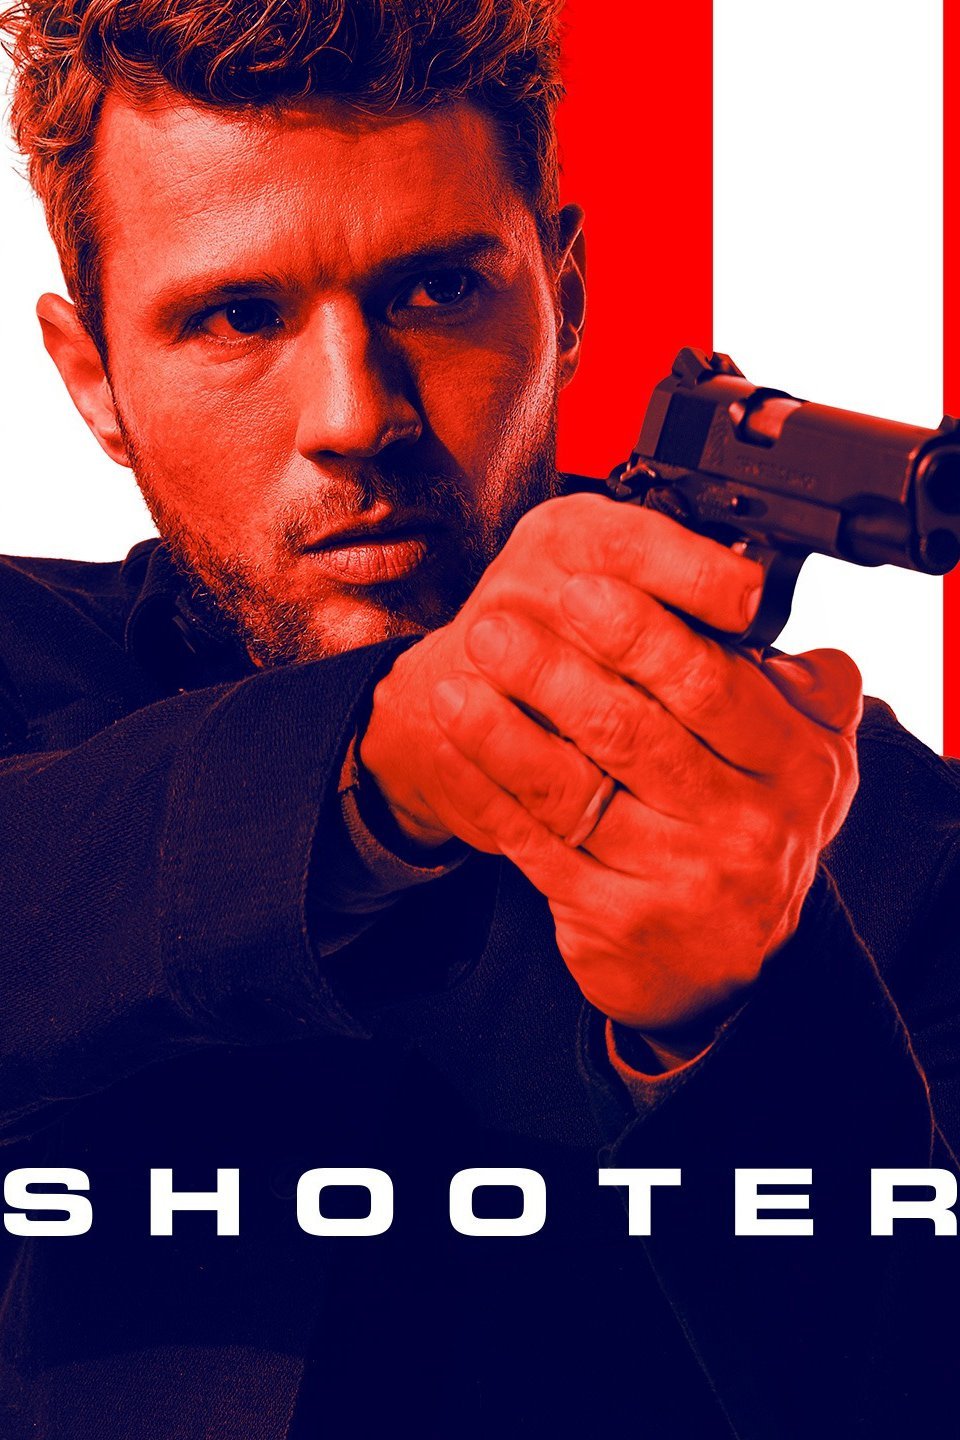 Shooter 2007 - Full (HD)